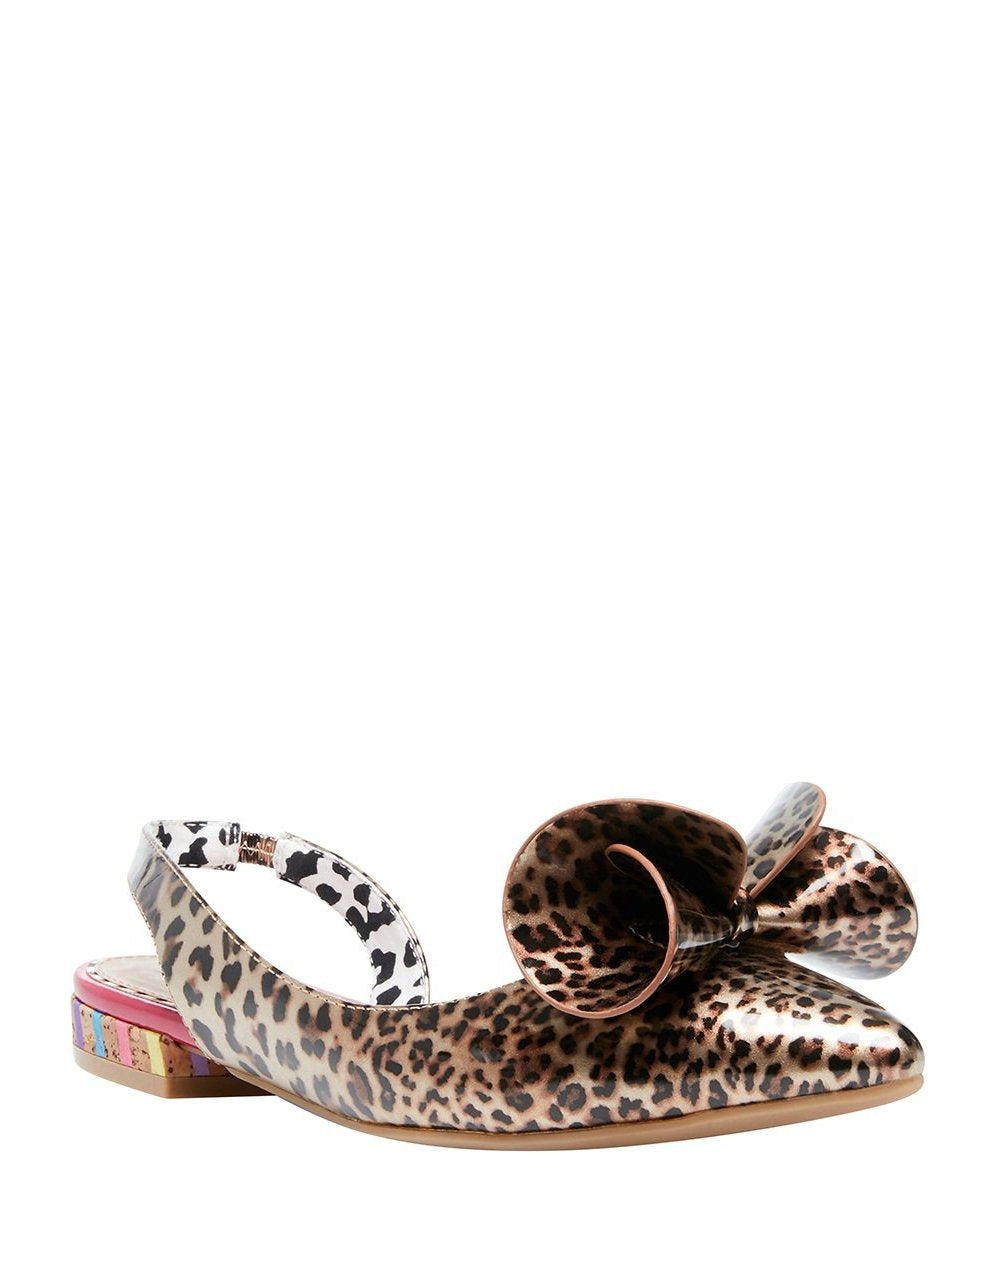 betsey johnson leopard shoes